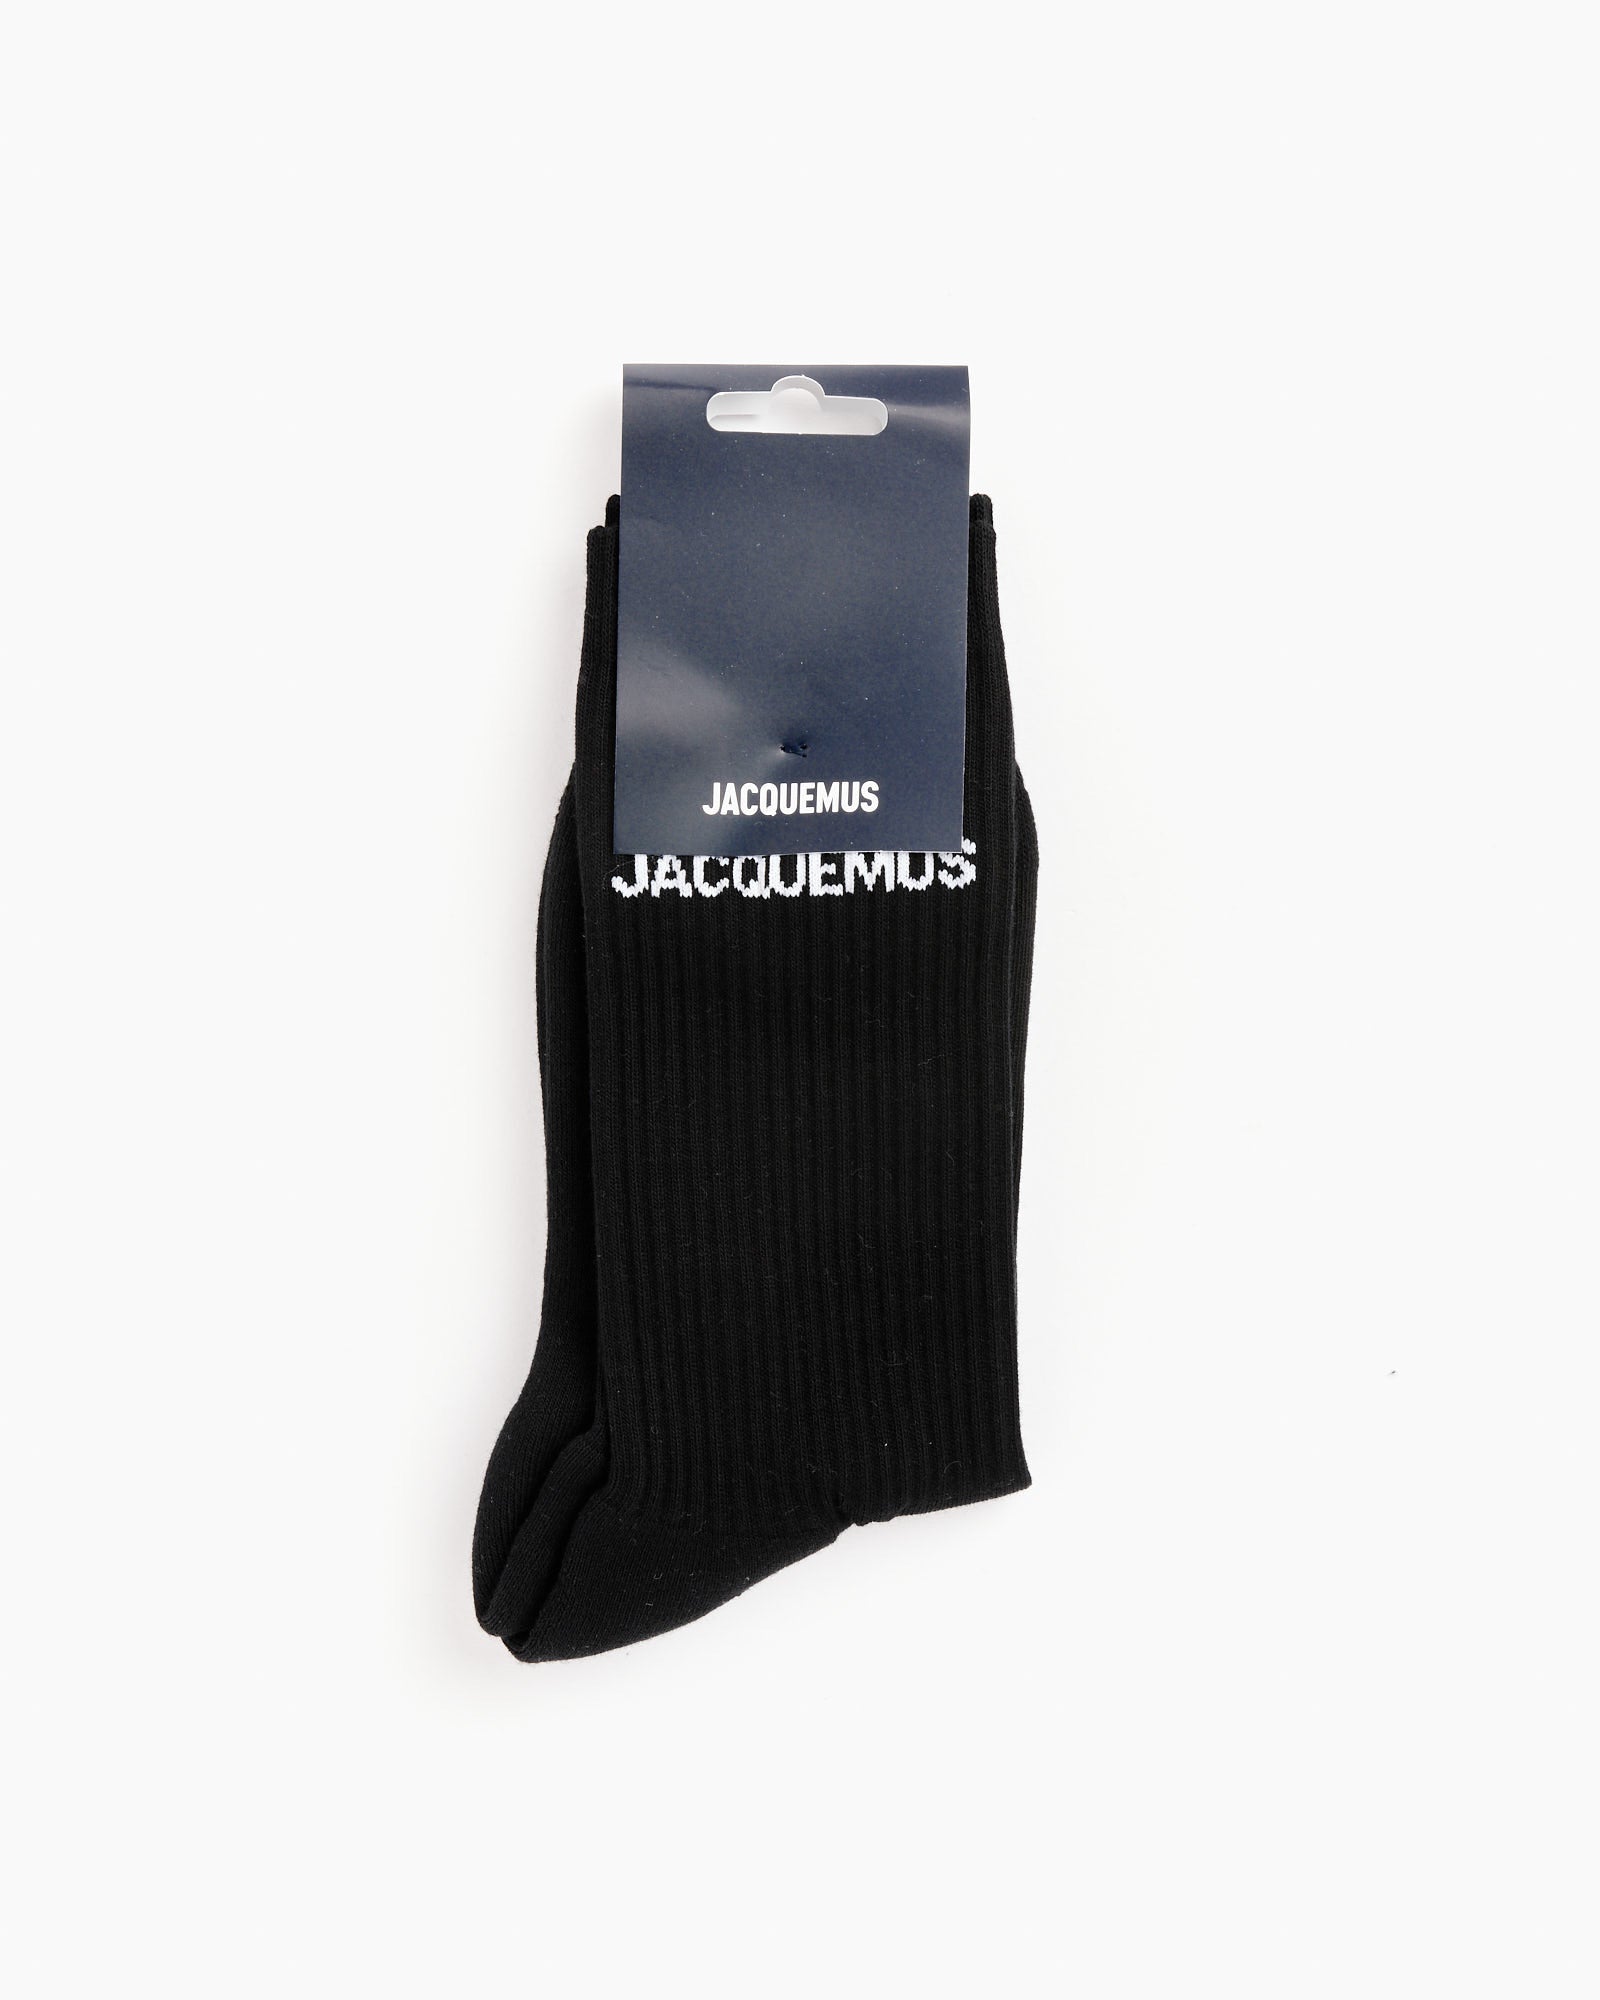 Les Chaussettes Socks in Black